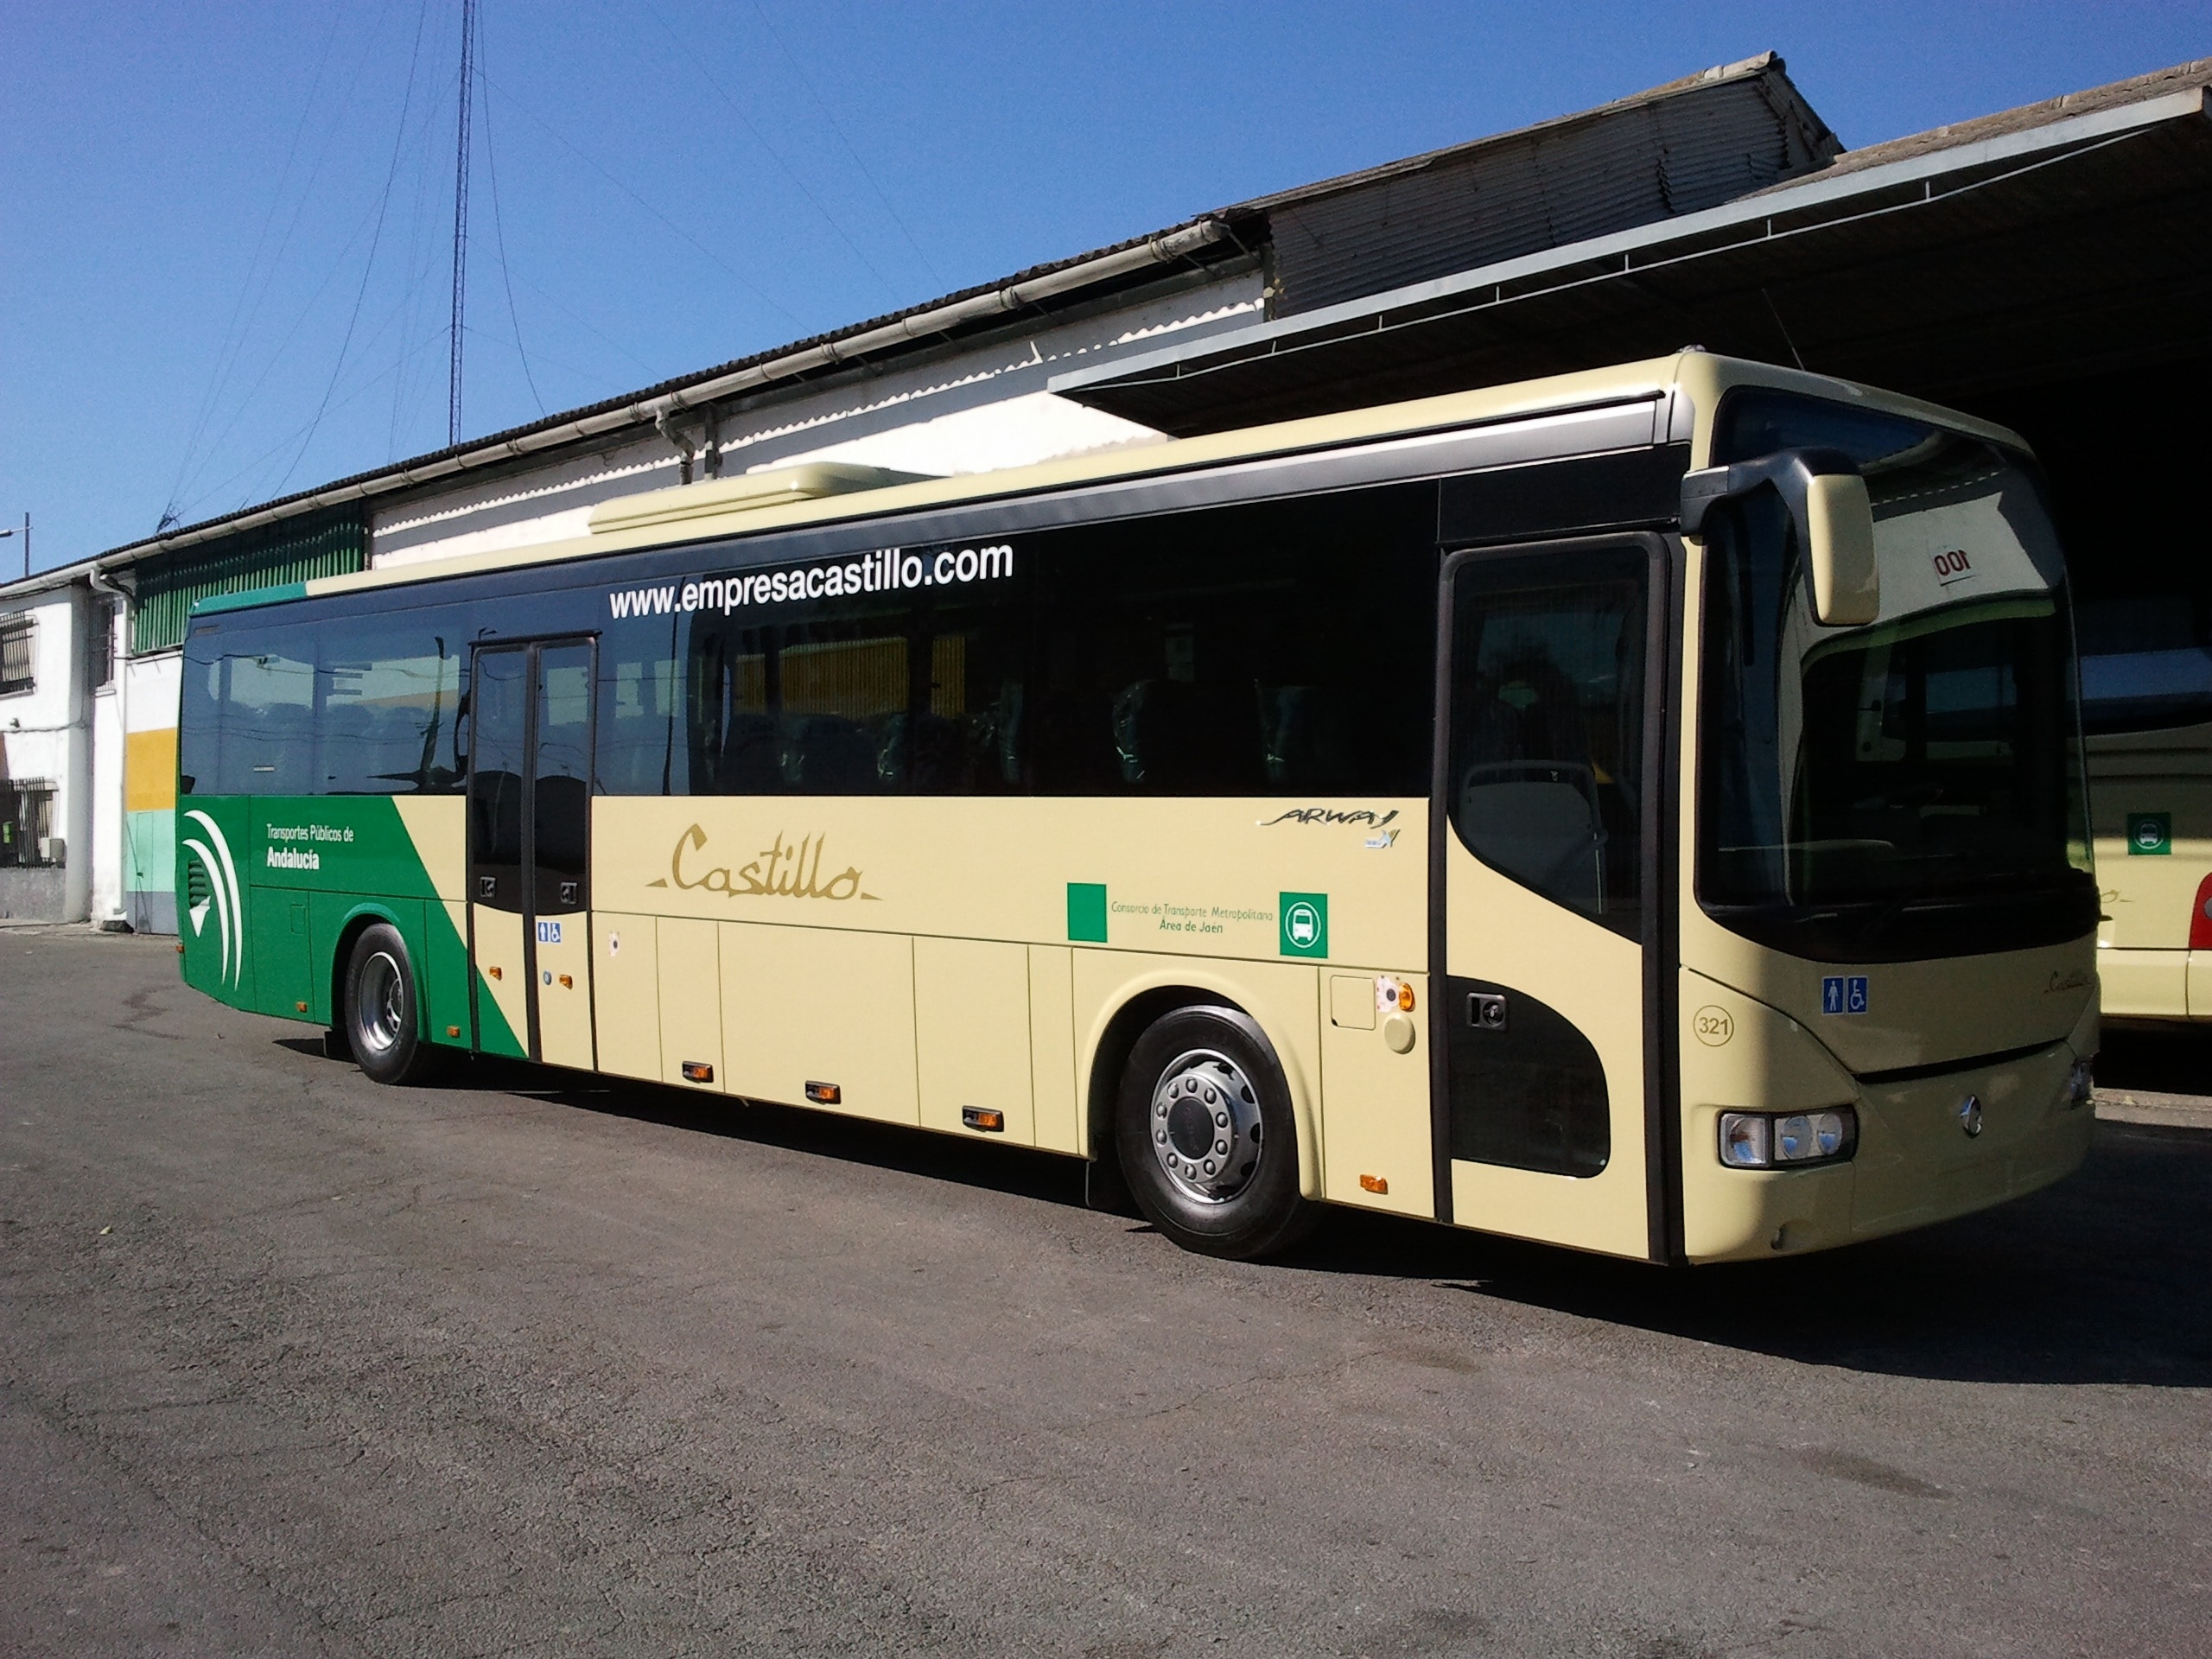 beige and green castillo bus